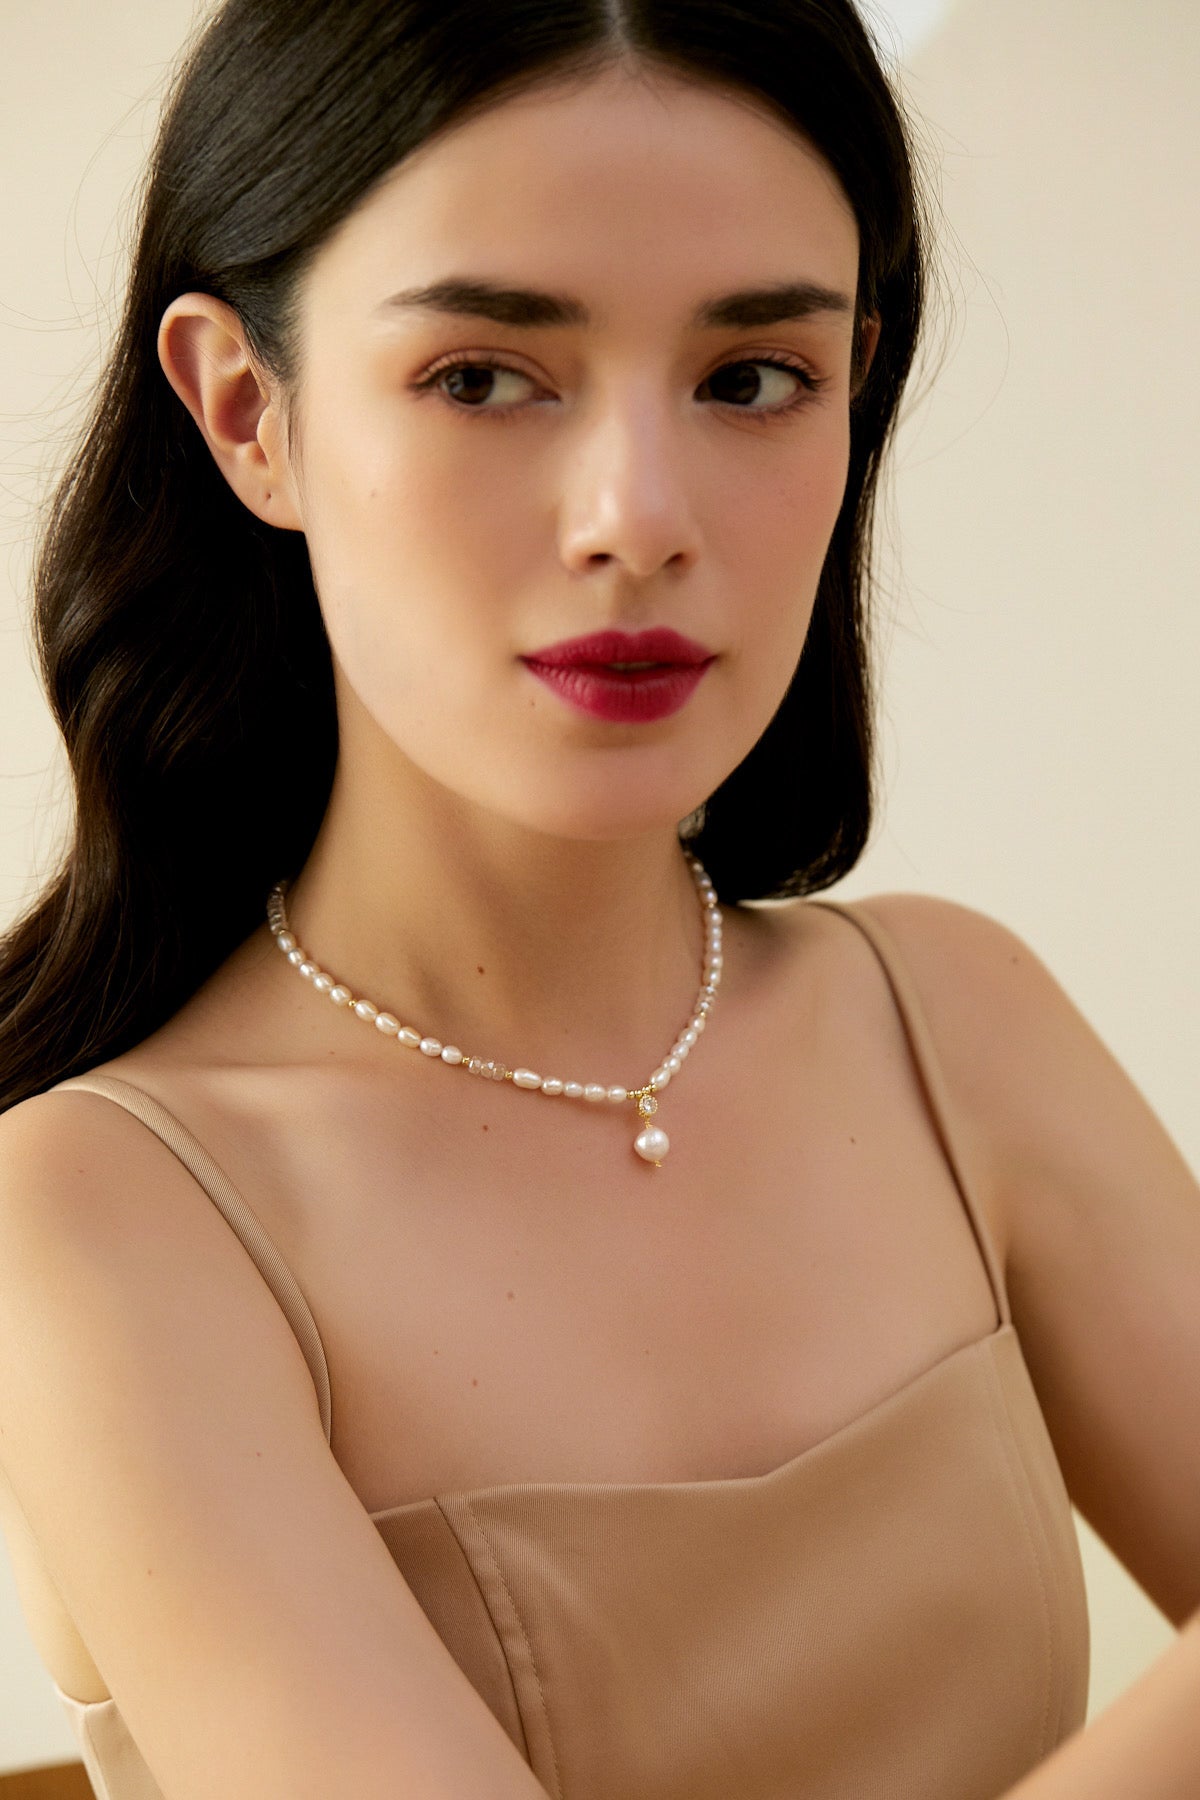 SKYE San Francisco Shop SF Chic Modern Elegant Classy Women Jewelry French Parisian Minimalist Lena pearl chocker necklace 10